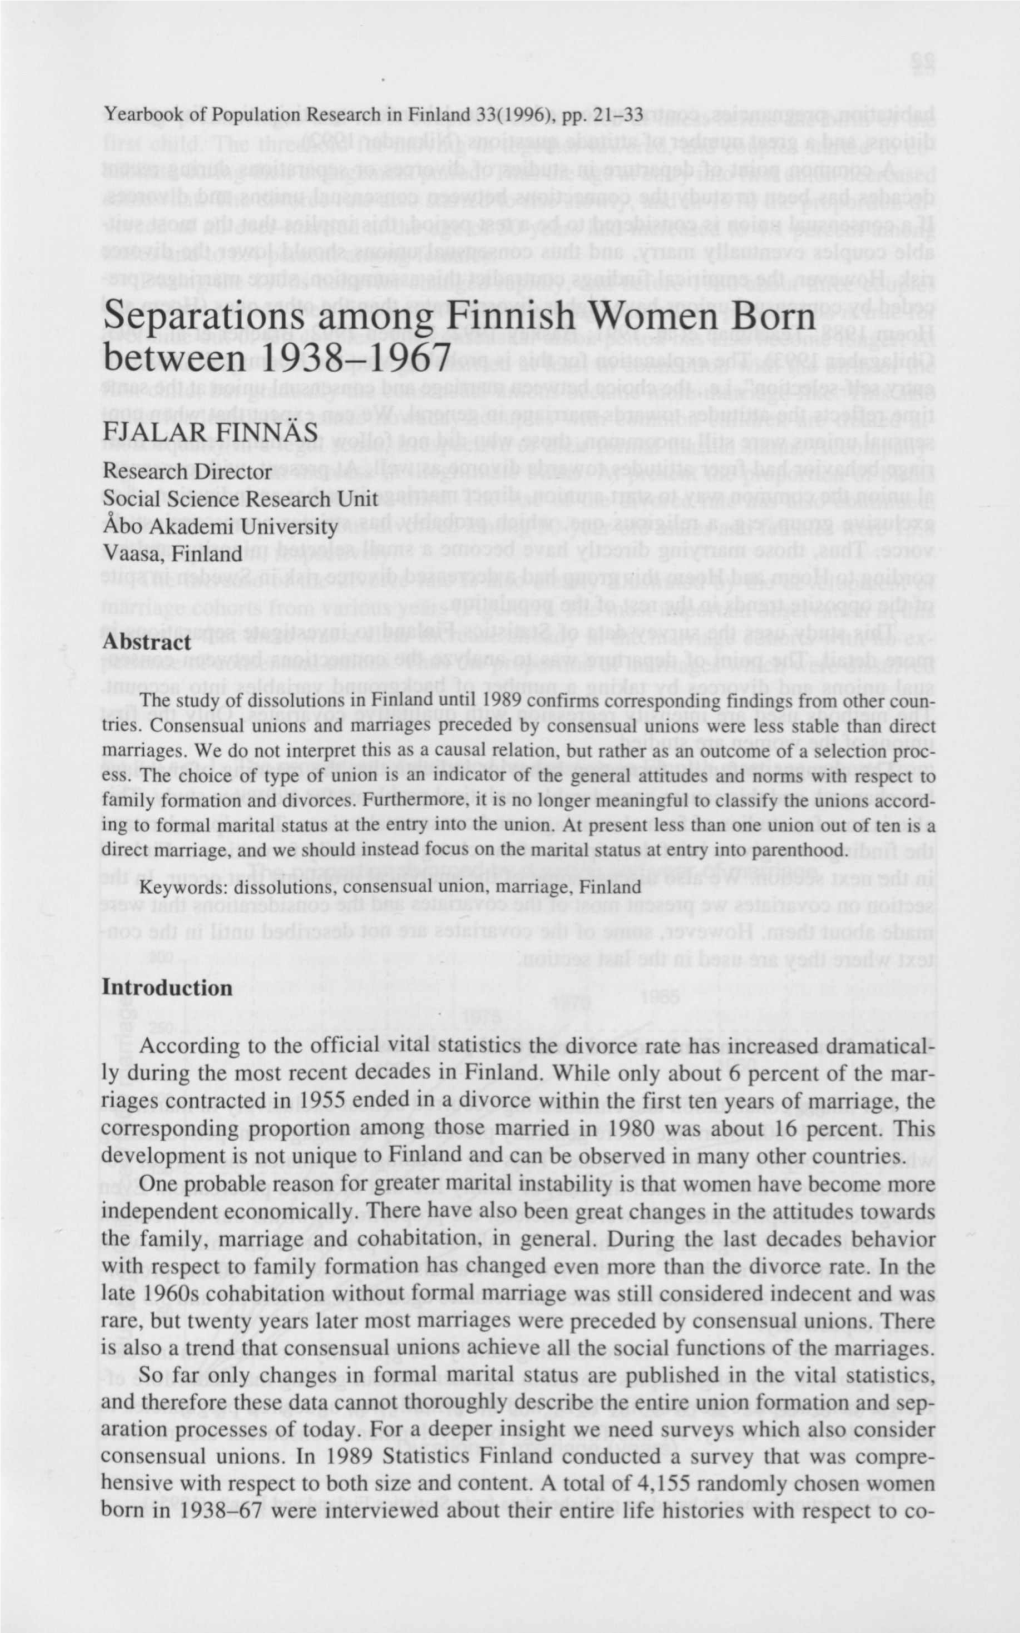 Separations Among Finnish Women Born Between 1938-1967